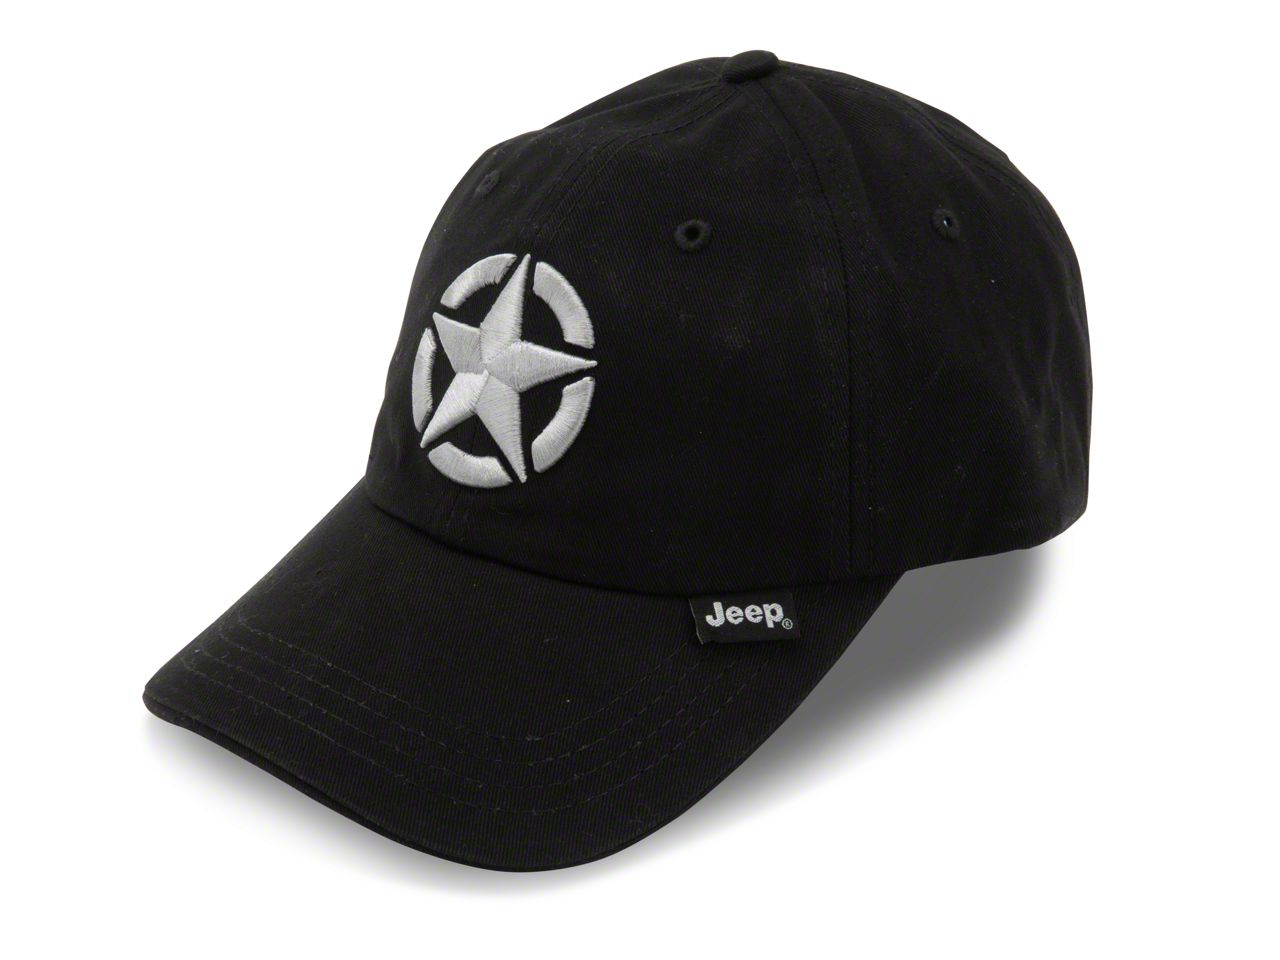 star hat